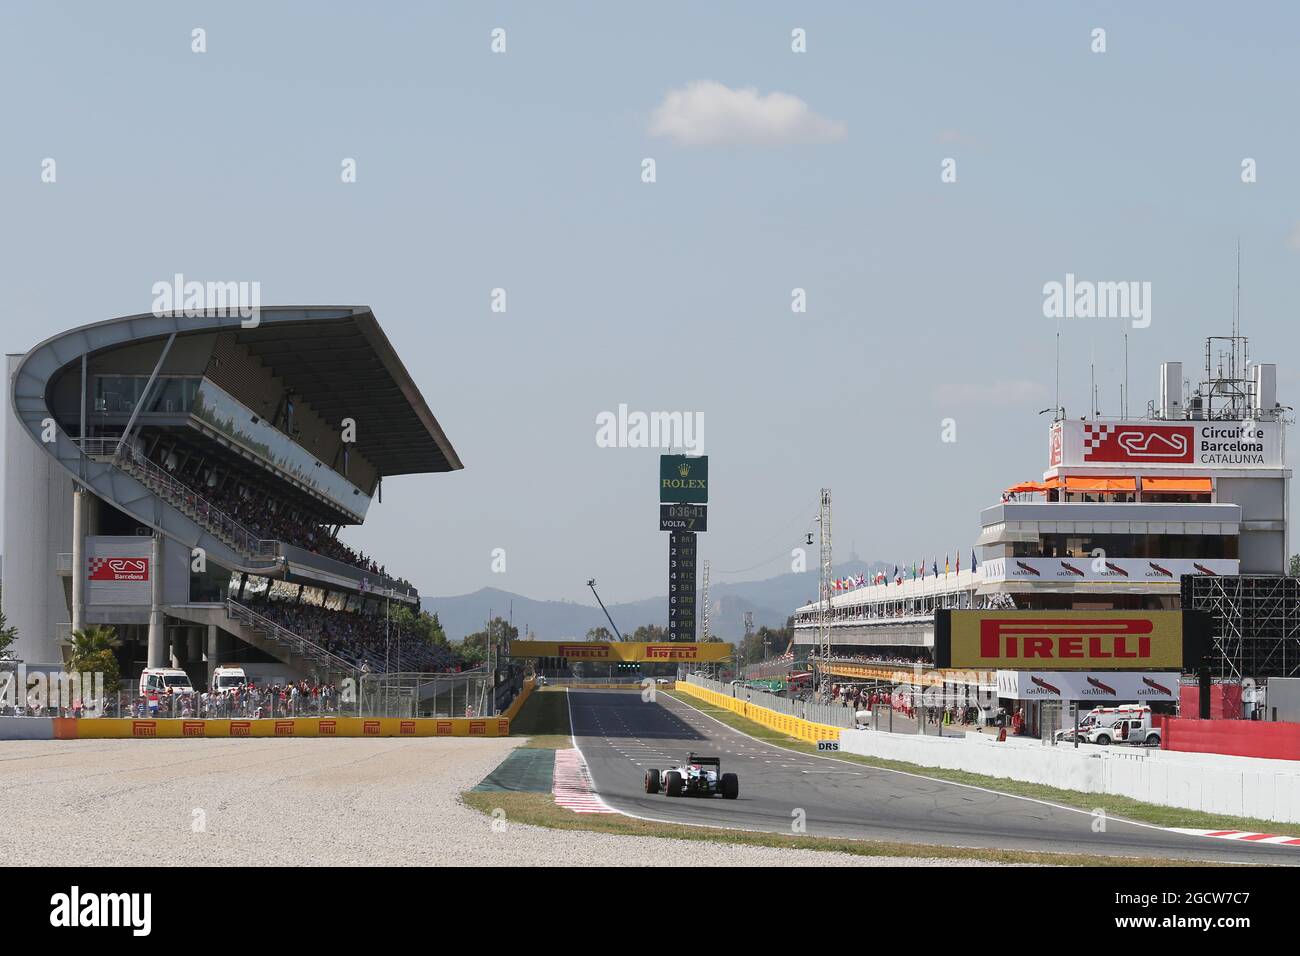 Valtteri Bottas (FIN) Williams FW37. Spanish Grand Prix, Saturday 9th May 2015. Barcelona, Spain. Stock Photo